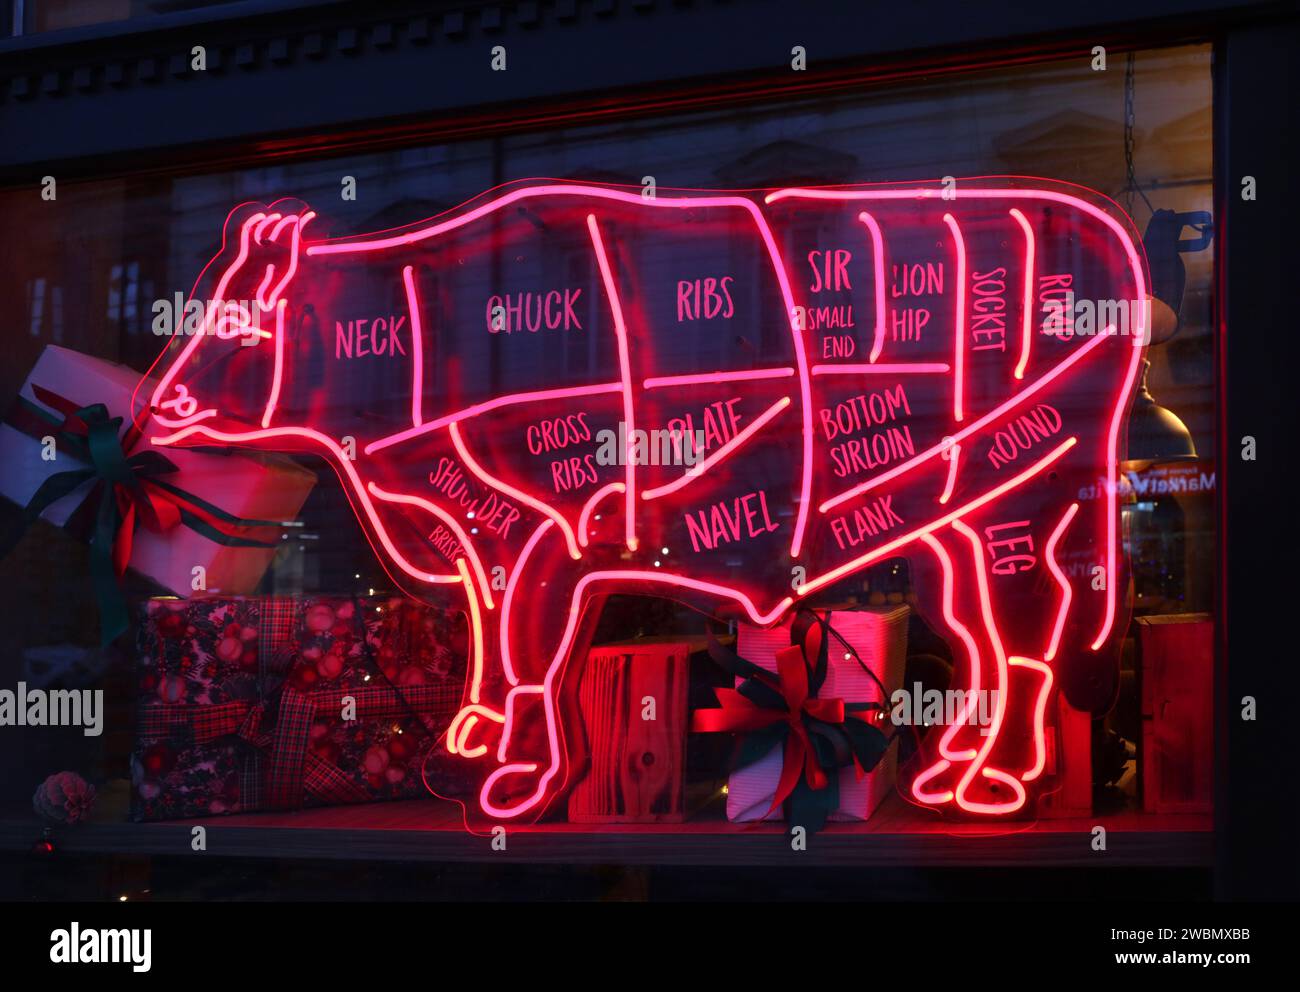 Beef meat cuts diagram butcher way.Neon sign in restaurant front window. Stock Photo